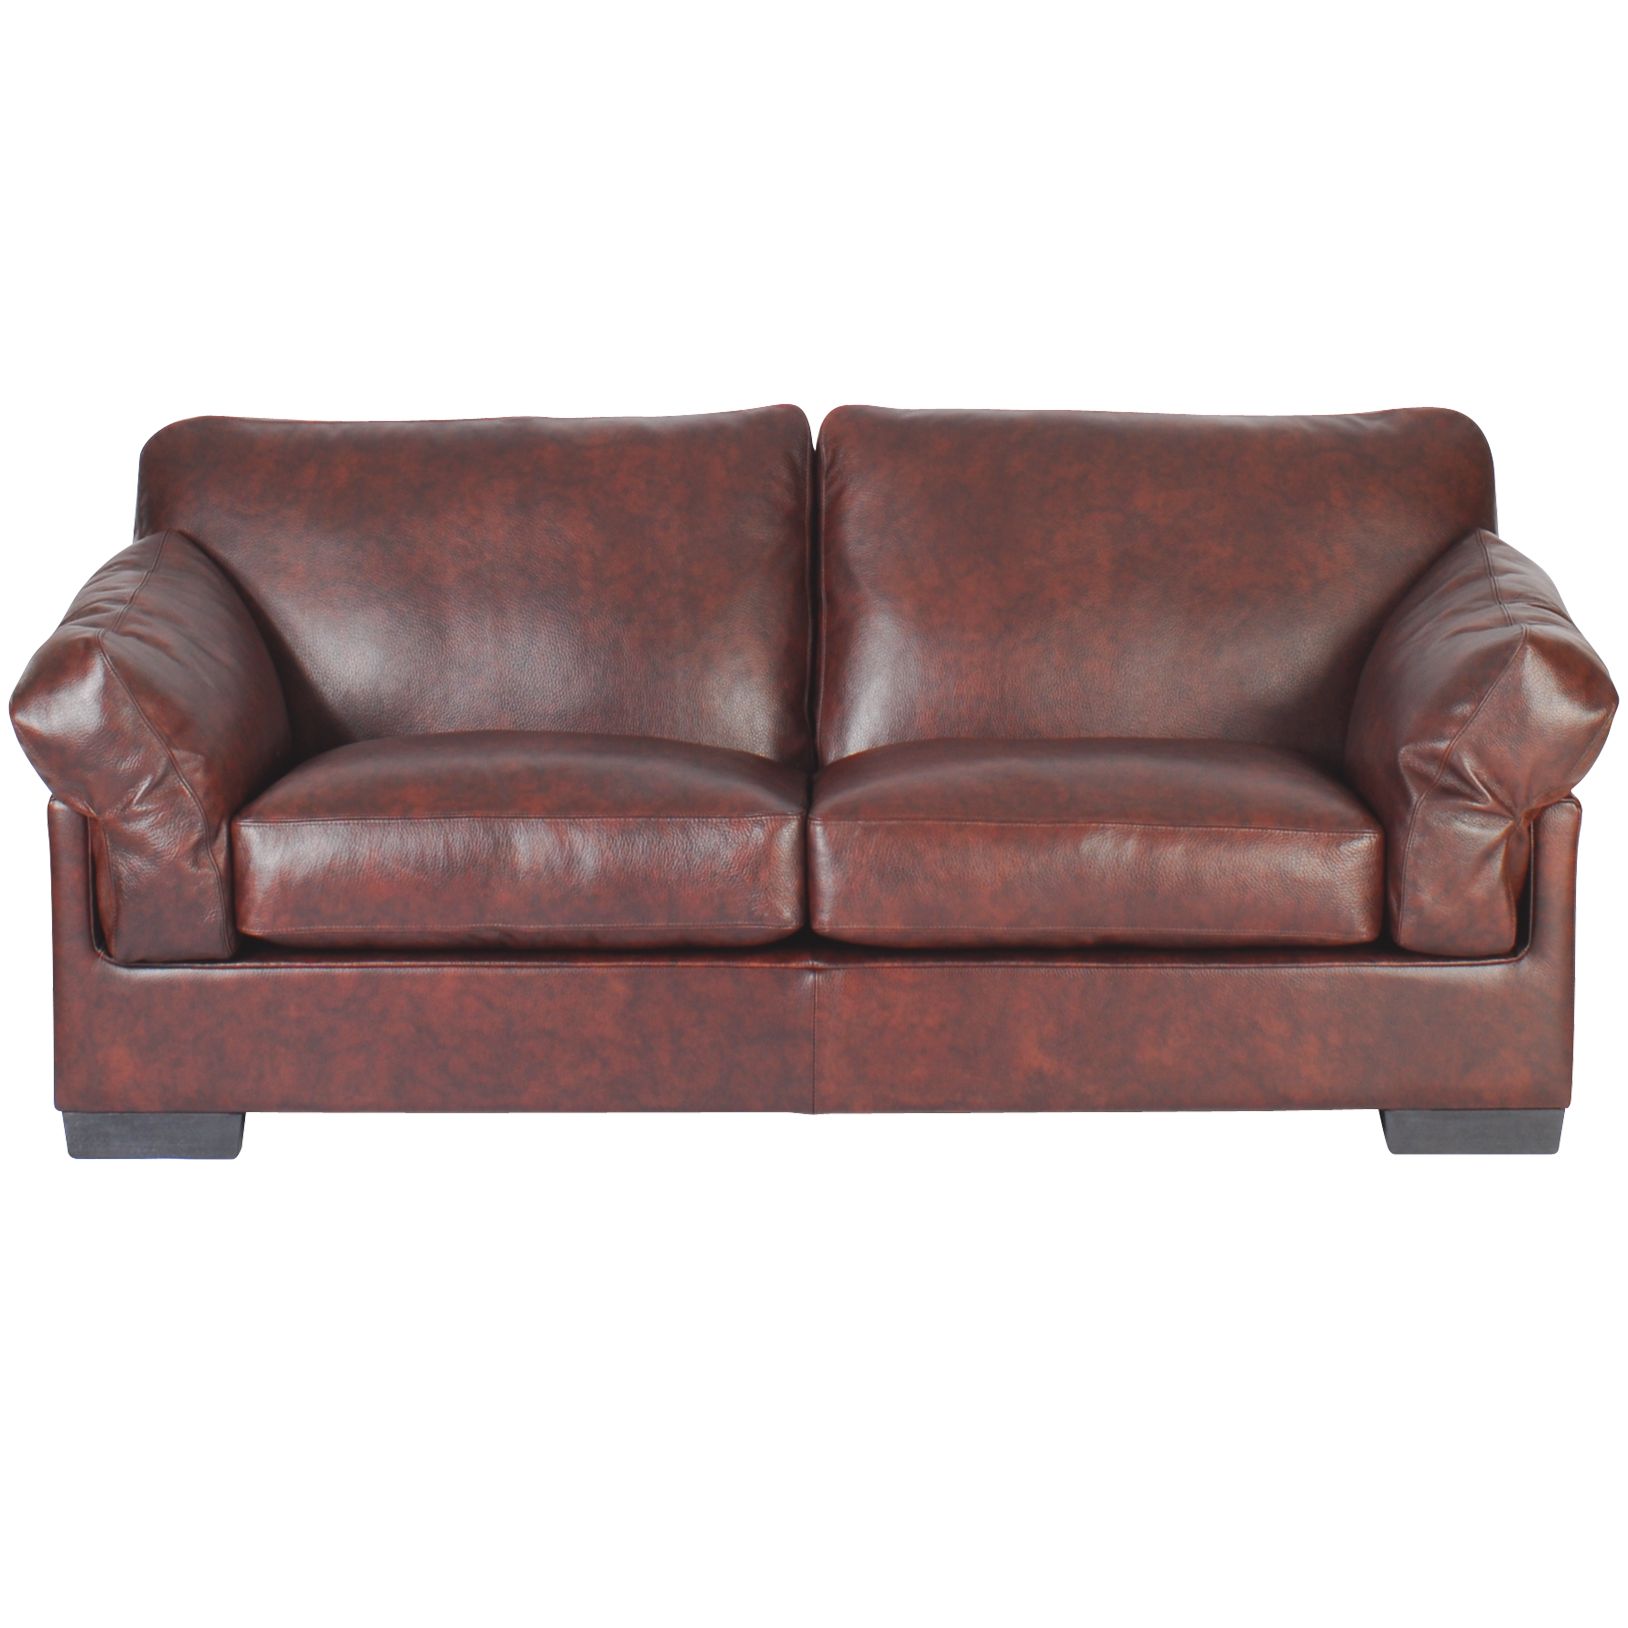 John Lewis Calanda Medium Leather Sofa, Chocolate, width 185cm